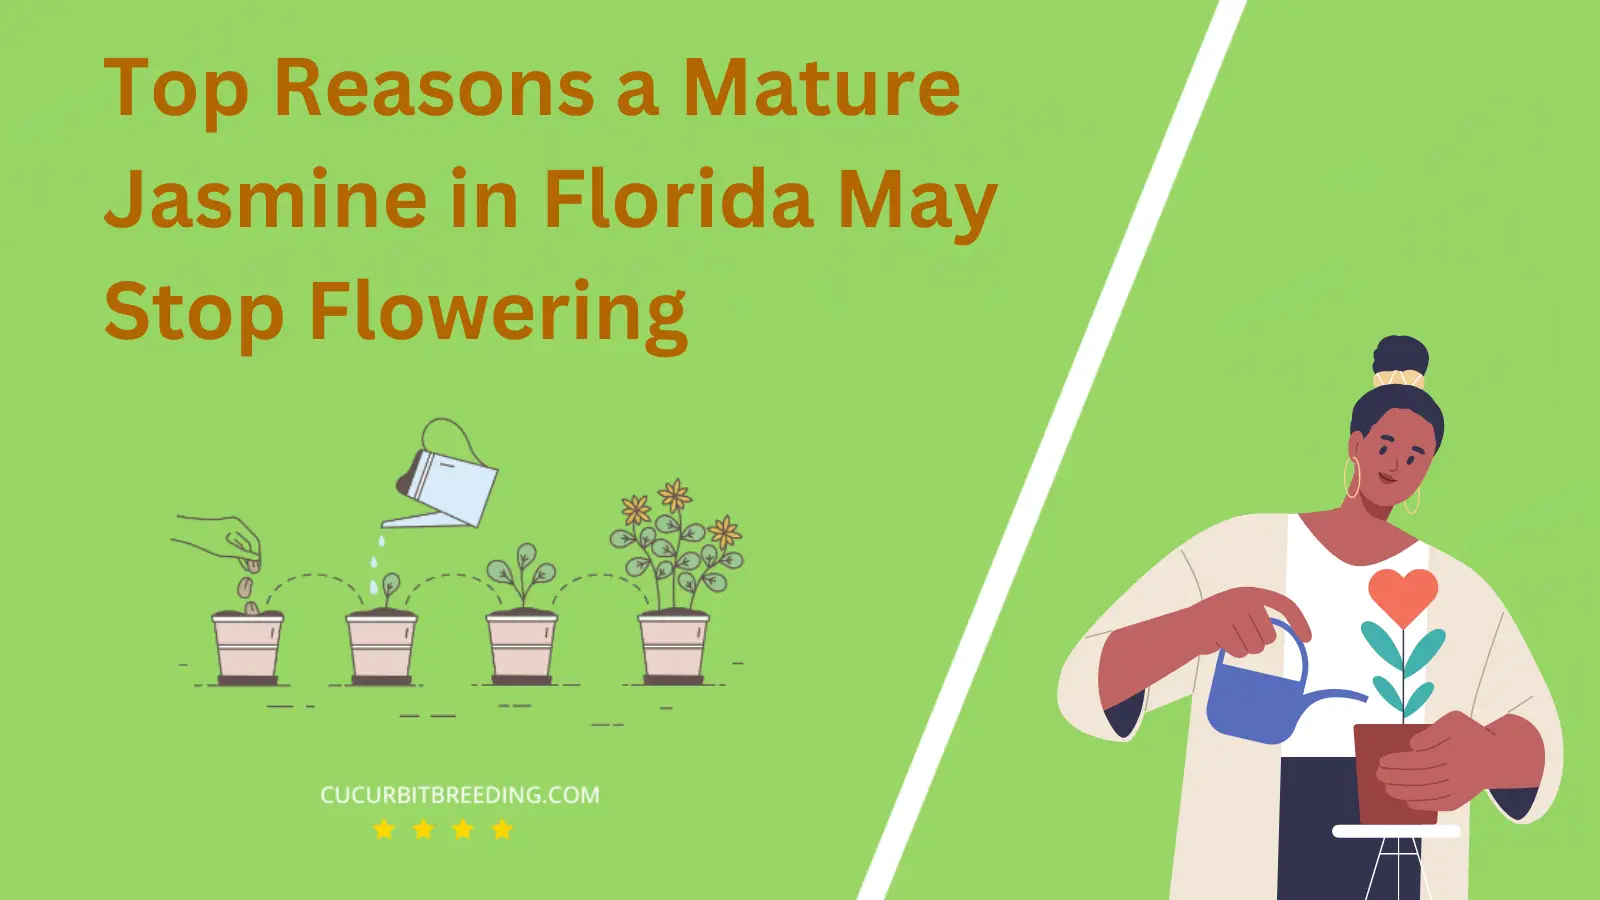 Top Reasons a Mature Jasmine in Florida May Stop Flowering